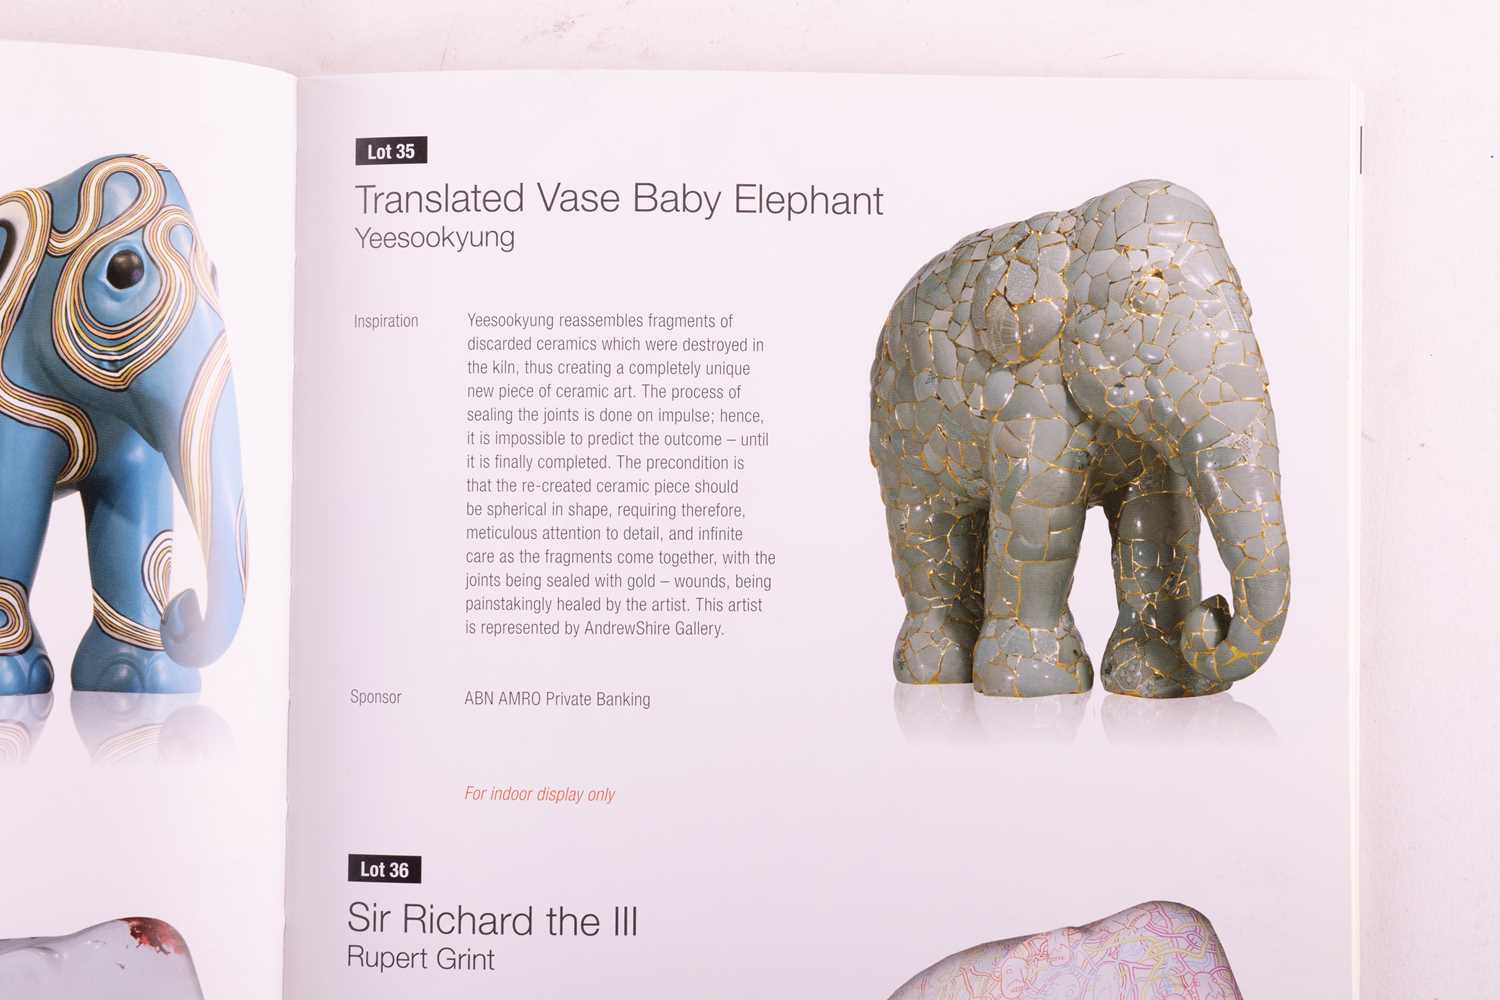 Yeesookyung (b. 1963) South Korean, 'Translated Vase Baby Elephant' (2012), celadon ceramic pieces f - Image 15 of 16